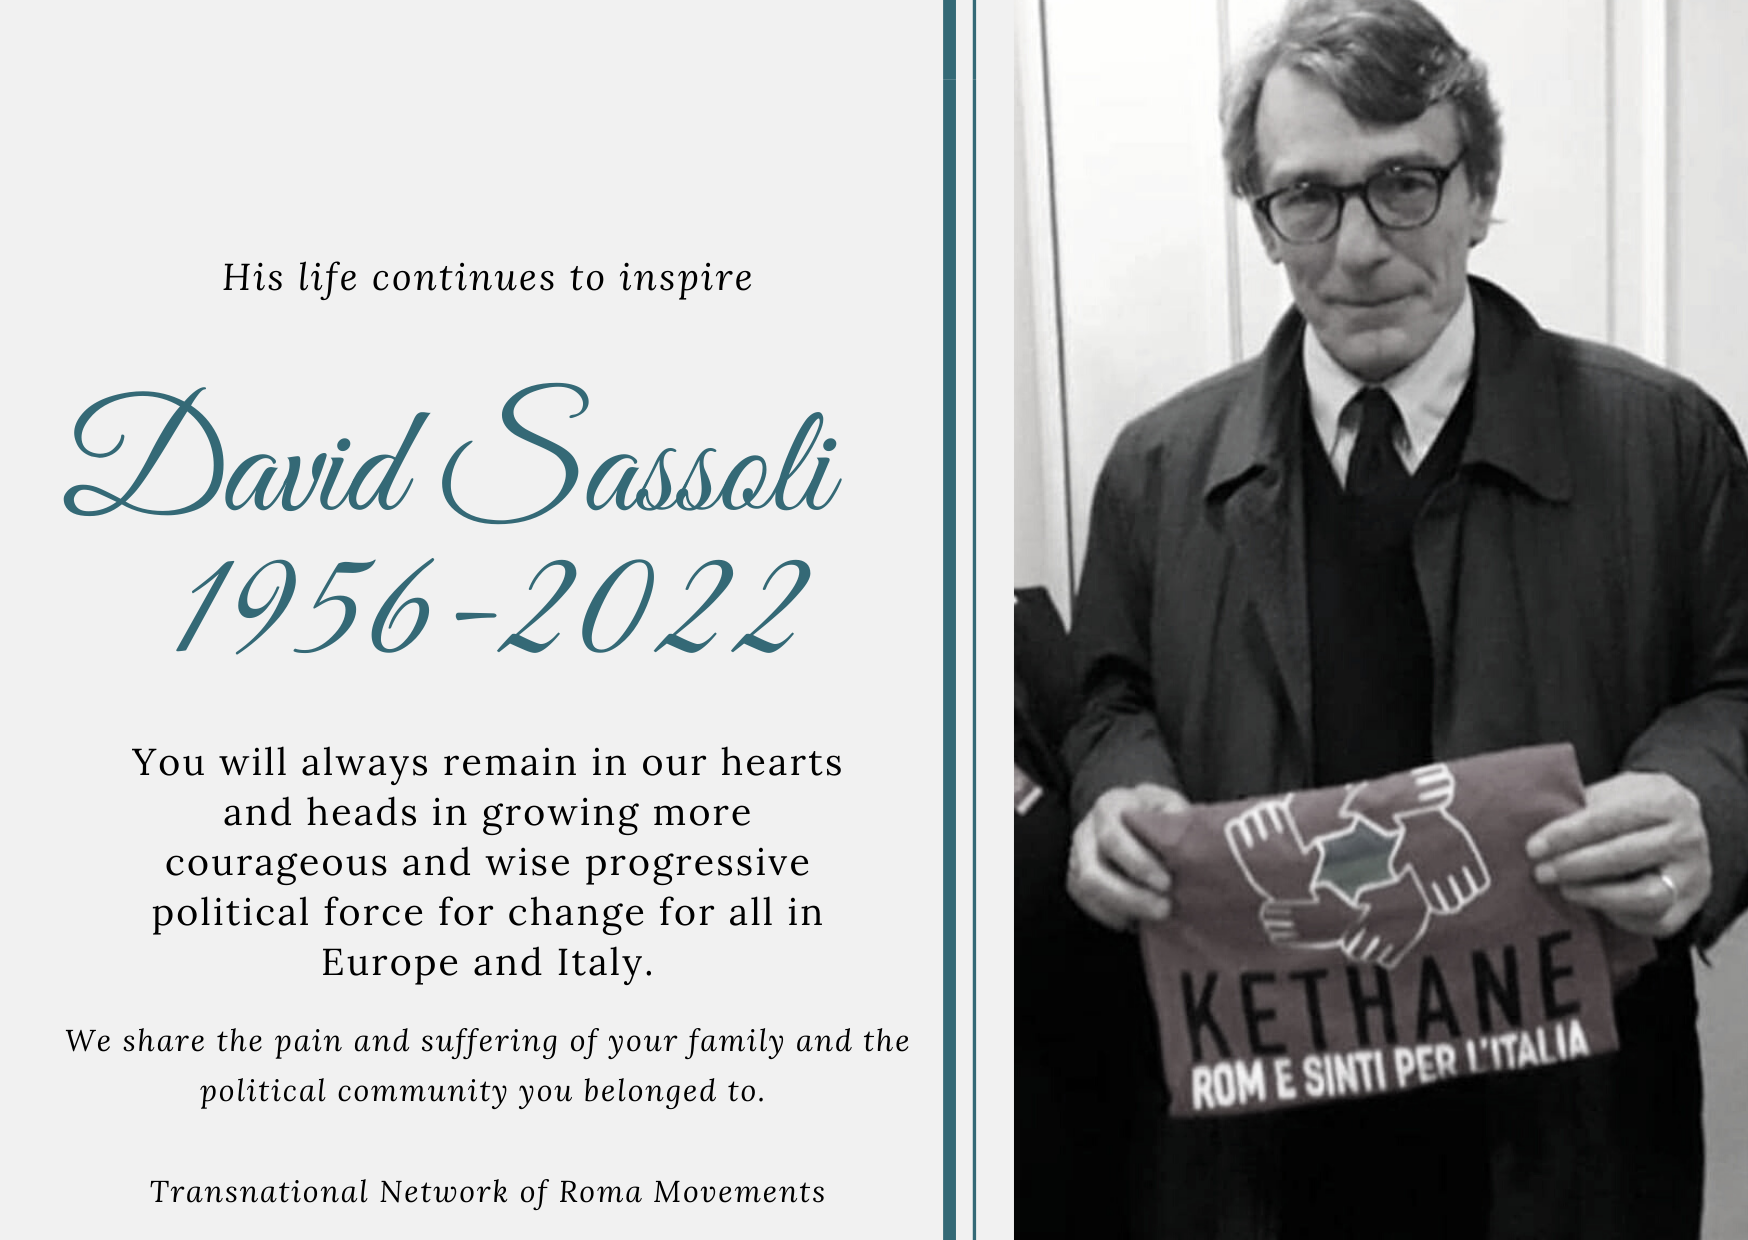 David Sassoli – His life continues to inspire